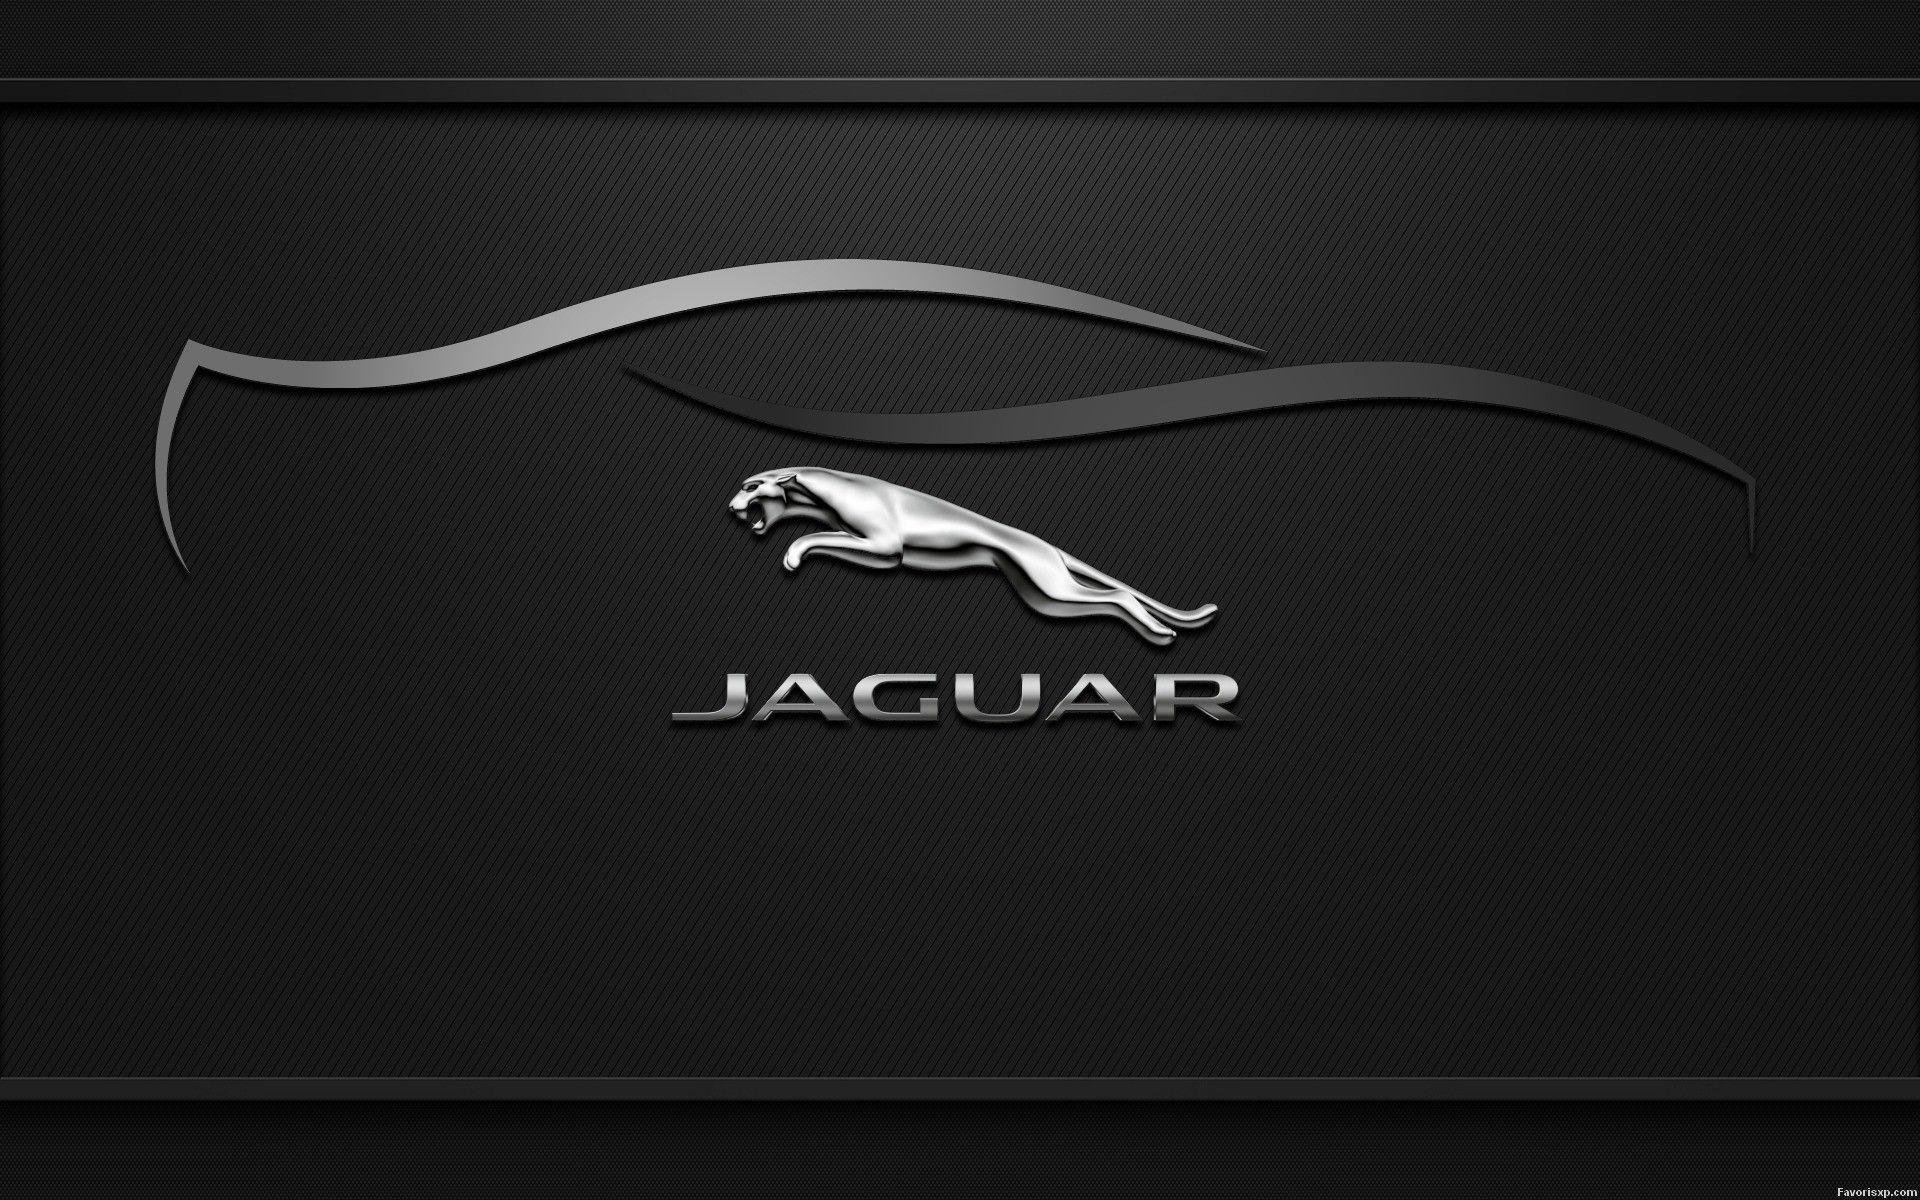 Jaguar Car Logo Wallpaper Desktop On Wallpaper 1080p HD. dj